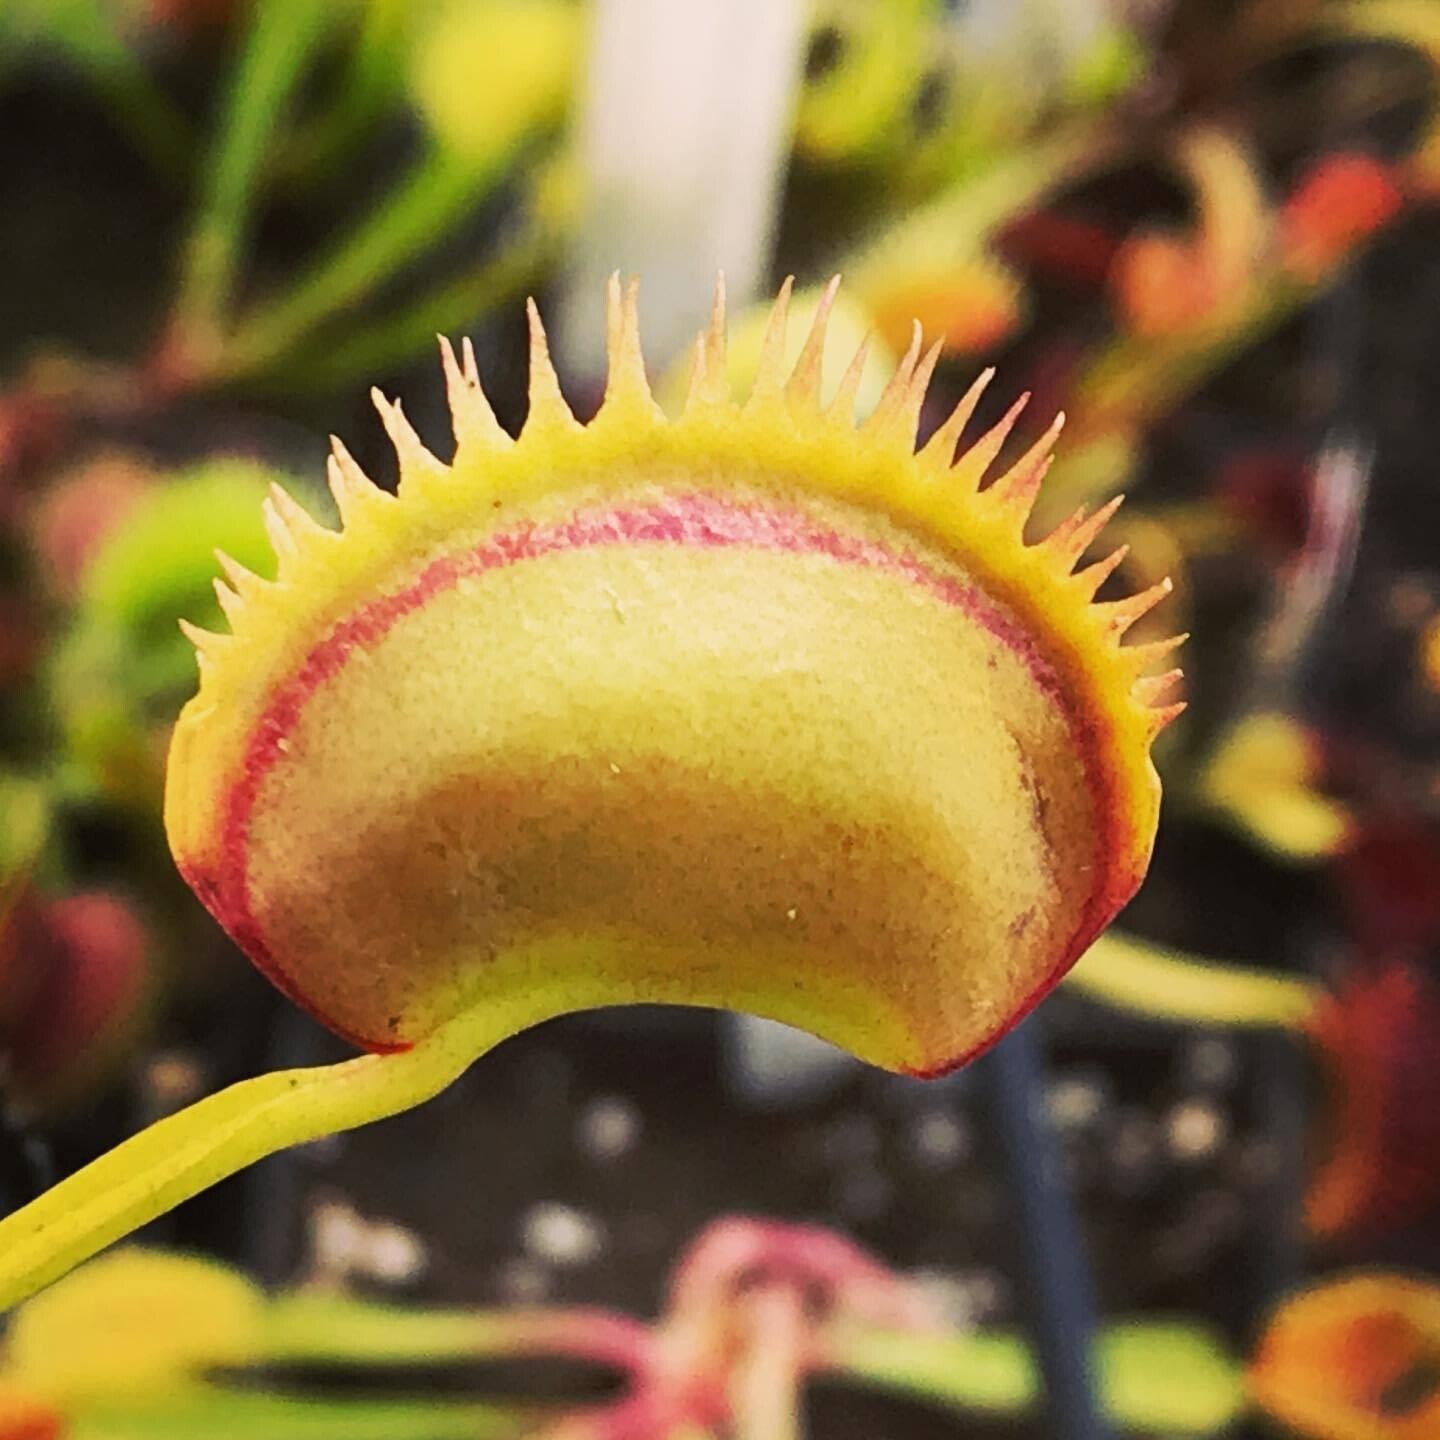 Dionaea muscipula “Fake Dracula” Venus Flytrap (small) Nice!